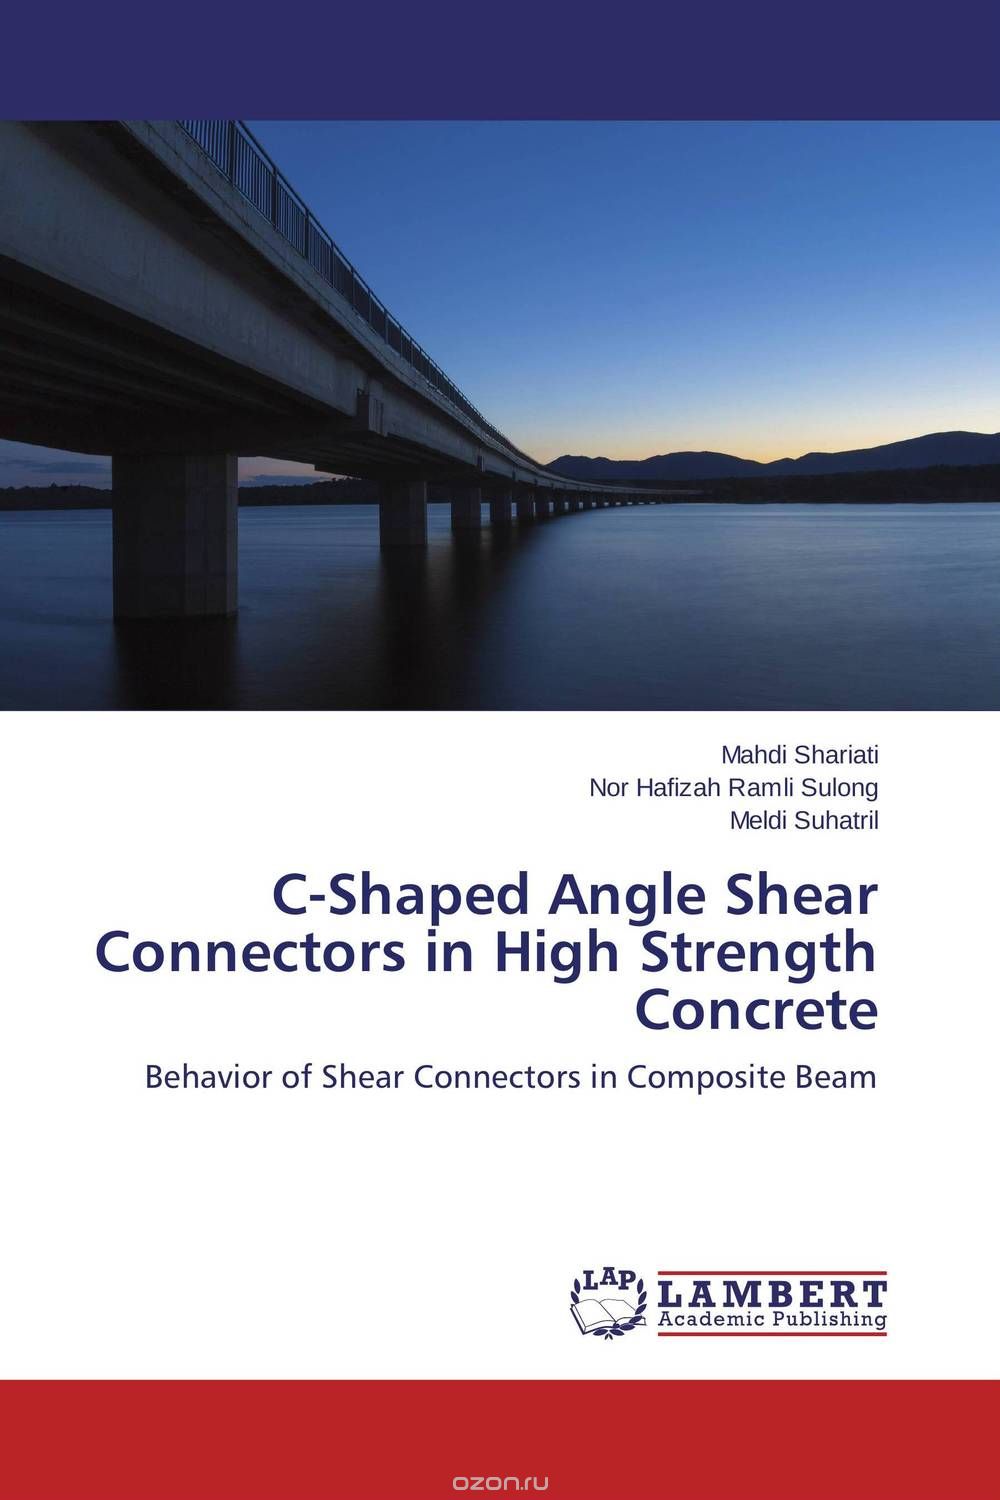 Скачать книгу "C-Shaped Angle Shear Connectors in High Strength Concrete"